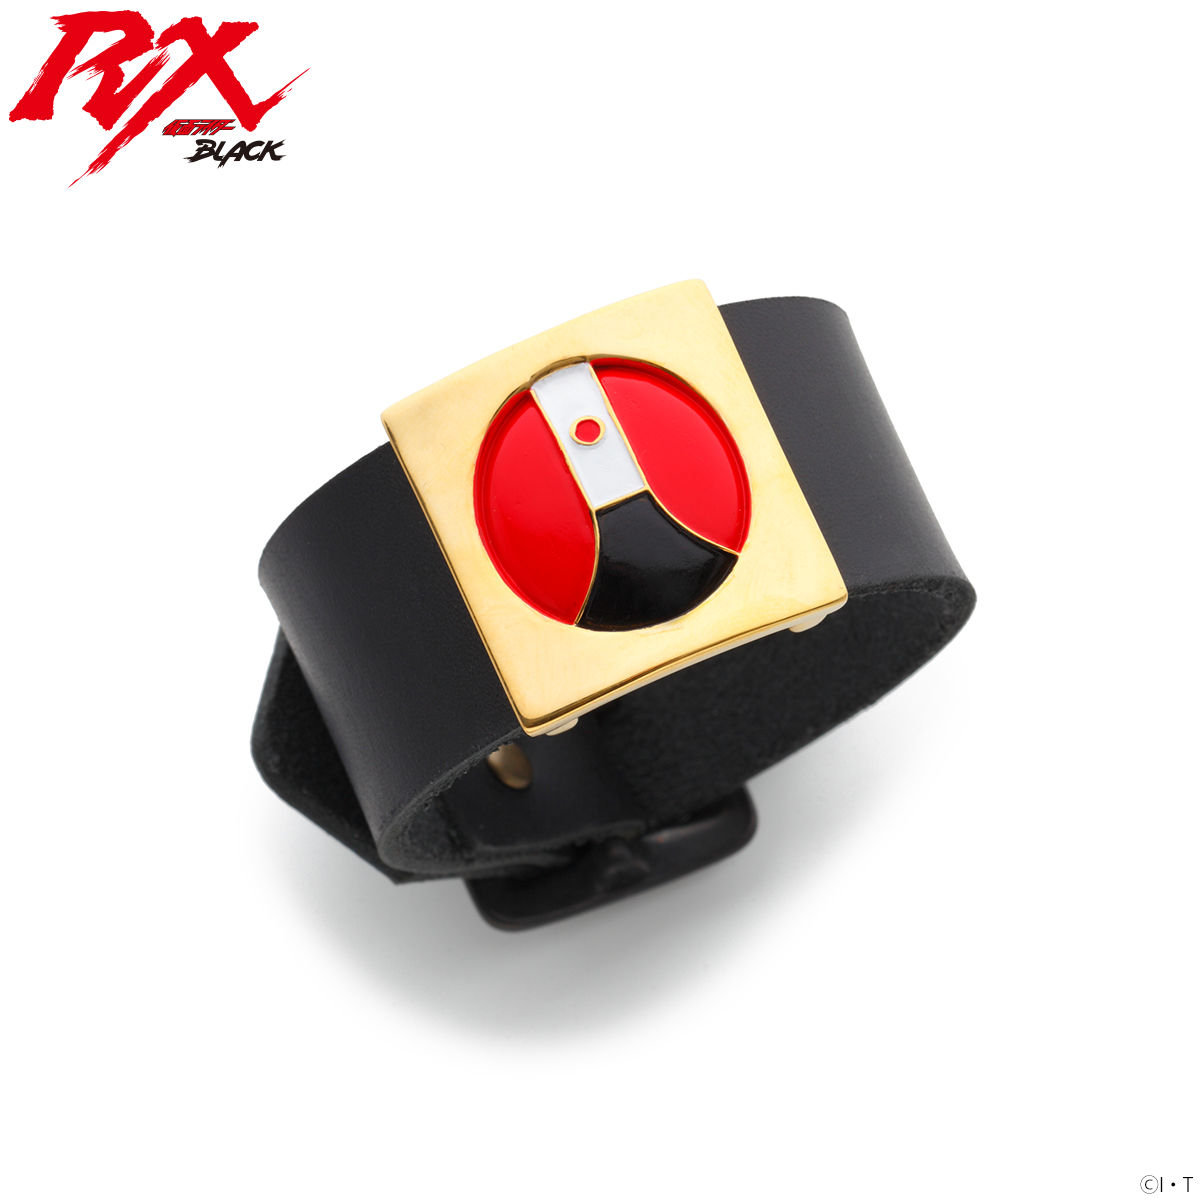 Kamen Rider BLACK RX Bracelet 